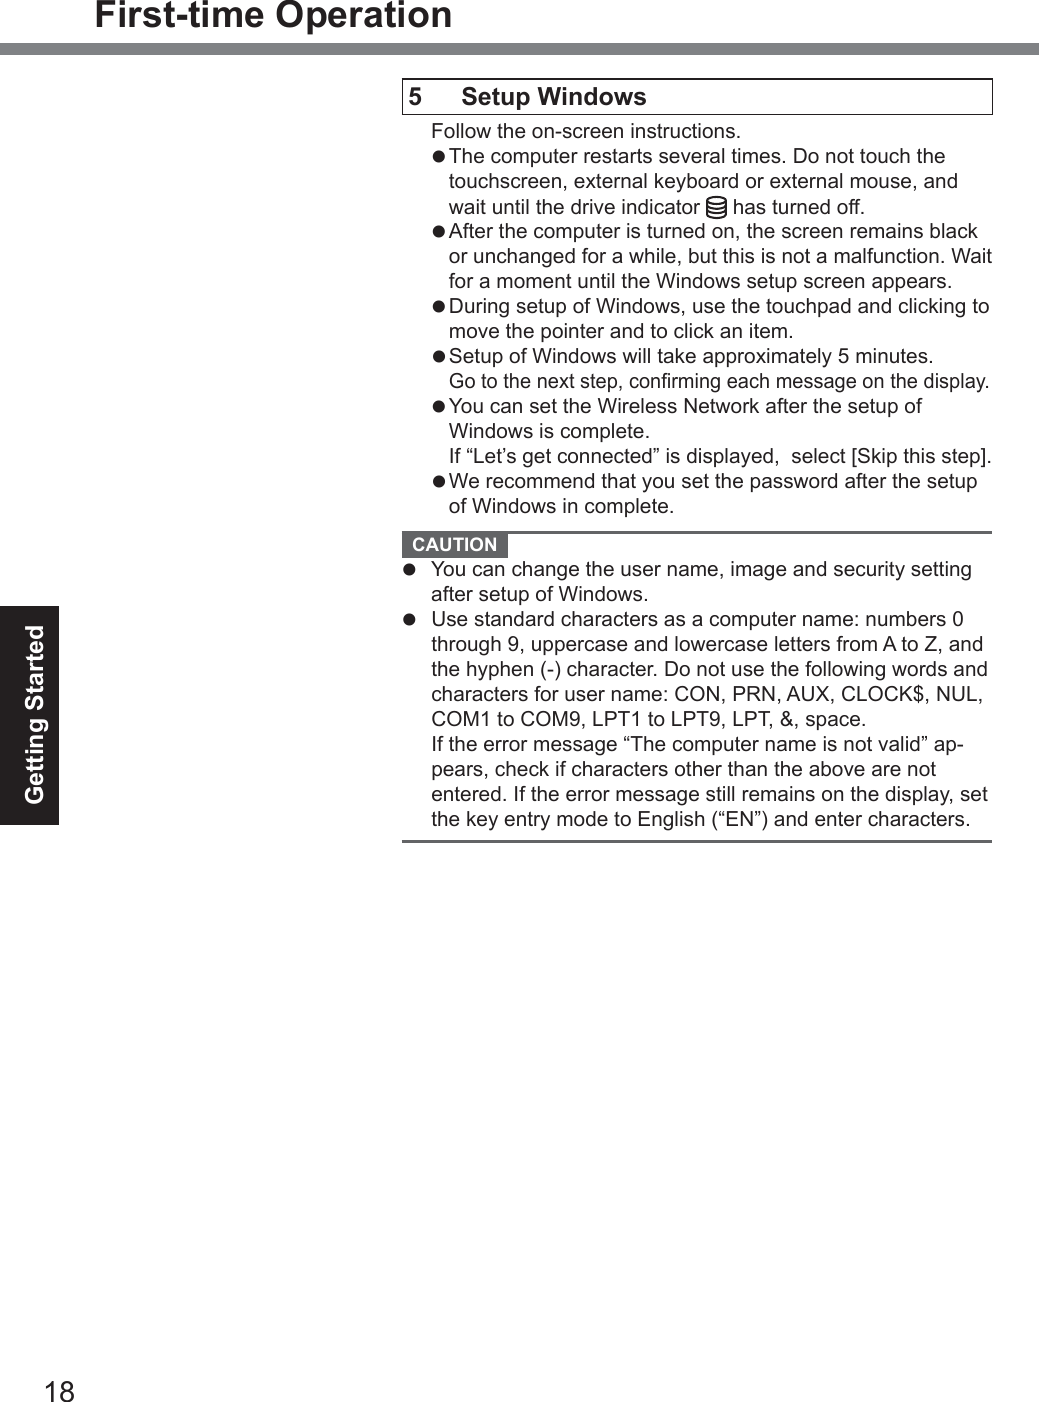 Page 18 of Panasonic of North America 9TGWW18A Radio Module User Manual FM171 Readme DHQX1325ZA T1  OI US M indb